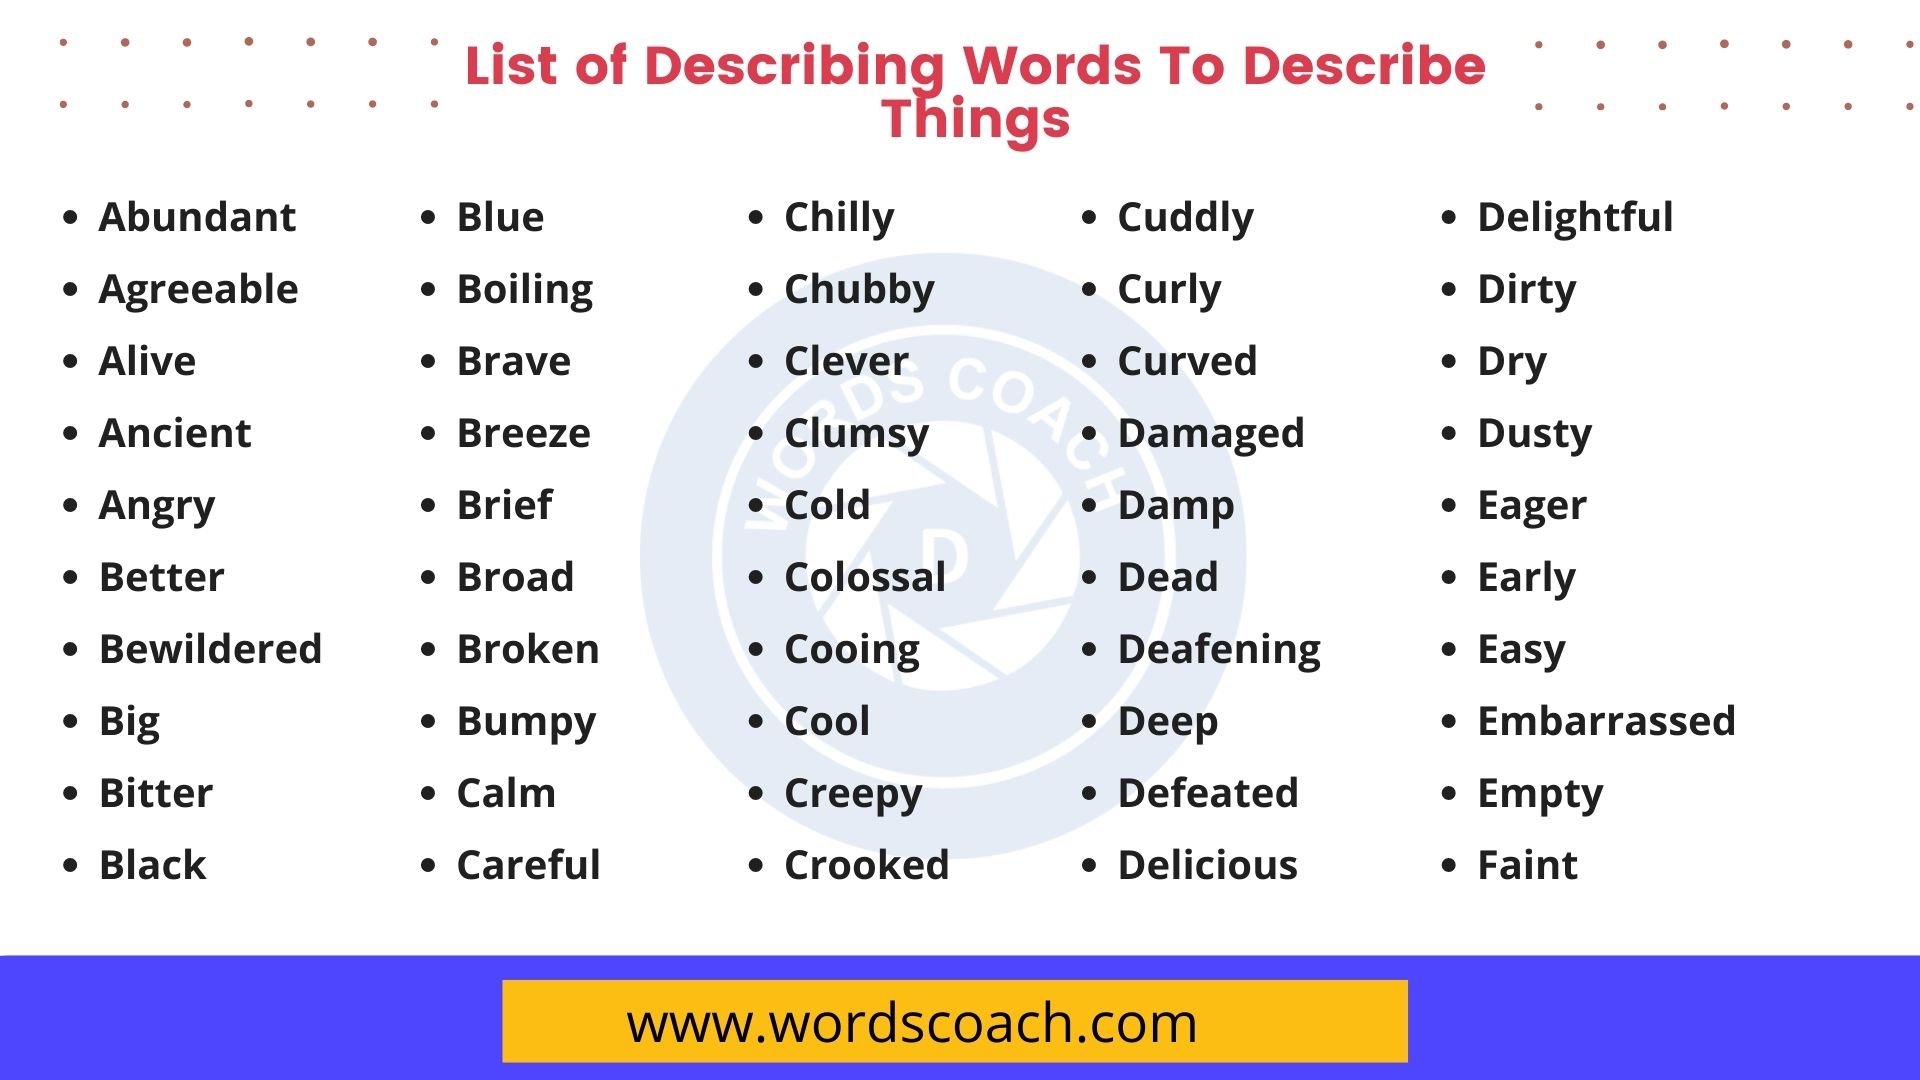 list-of-describing-words-word-coach